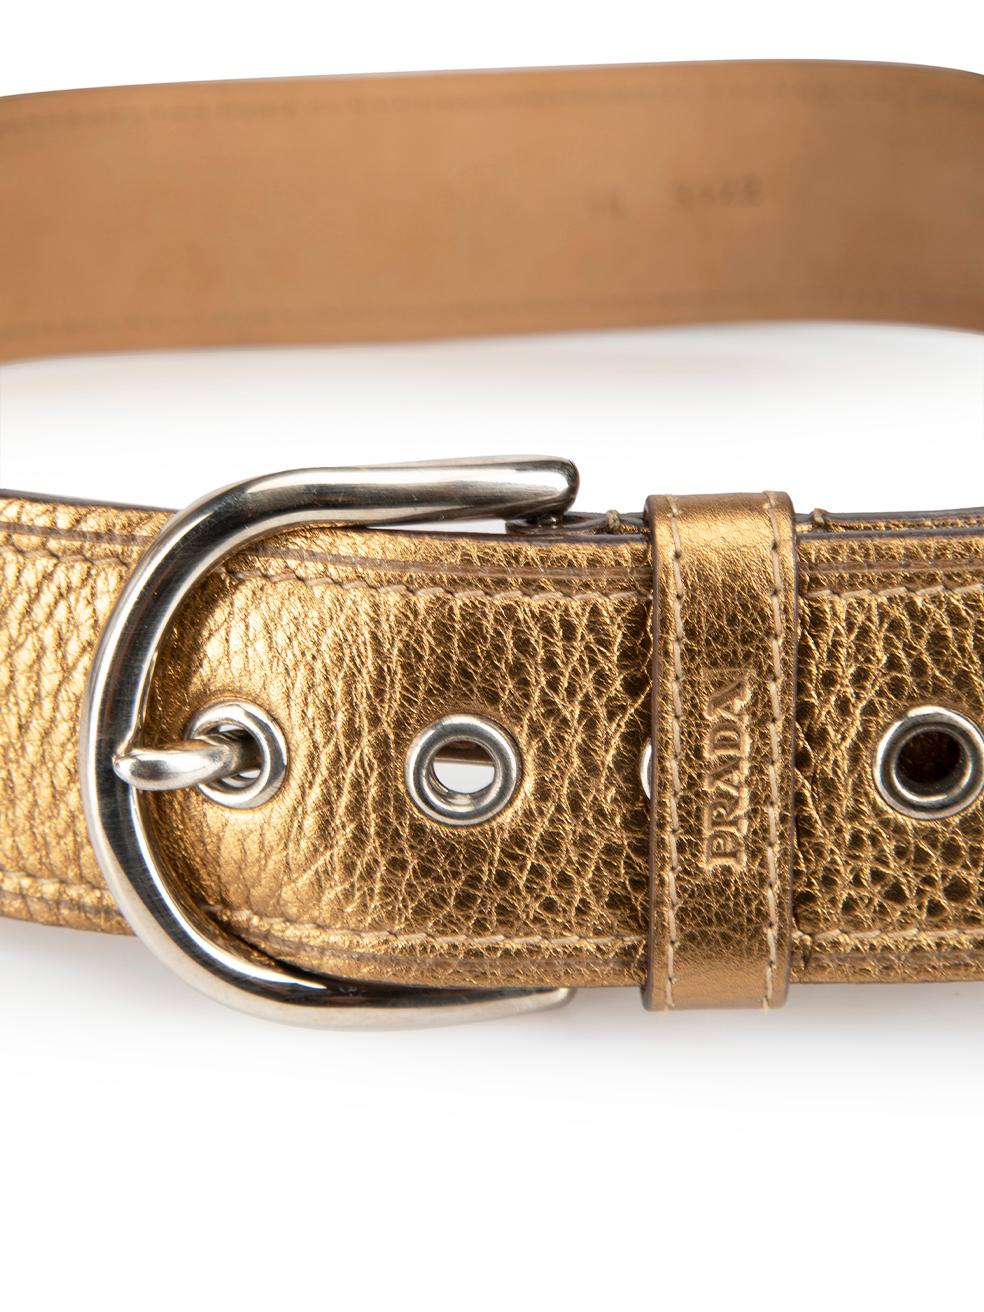 Prada Women's Gold Leather Metallic Belt For Sale 2